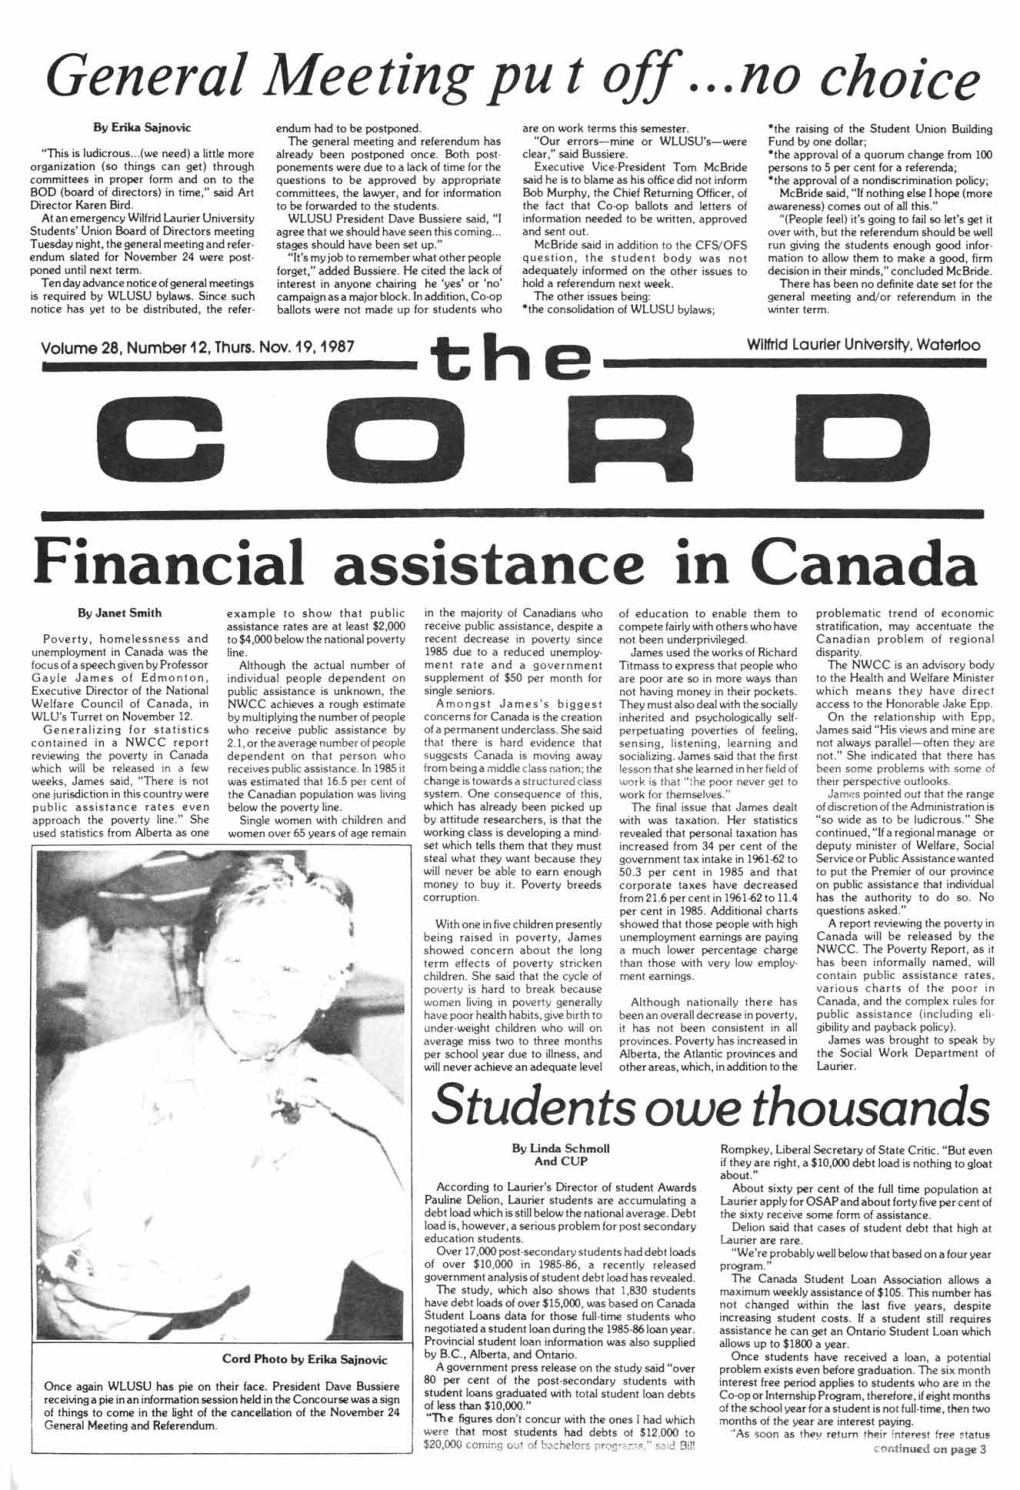 The Cord Weekly (November 19, 1987)